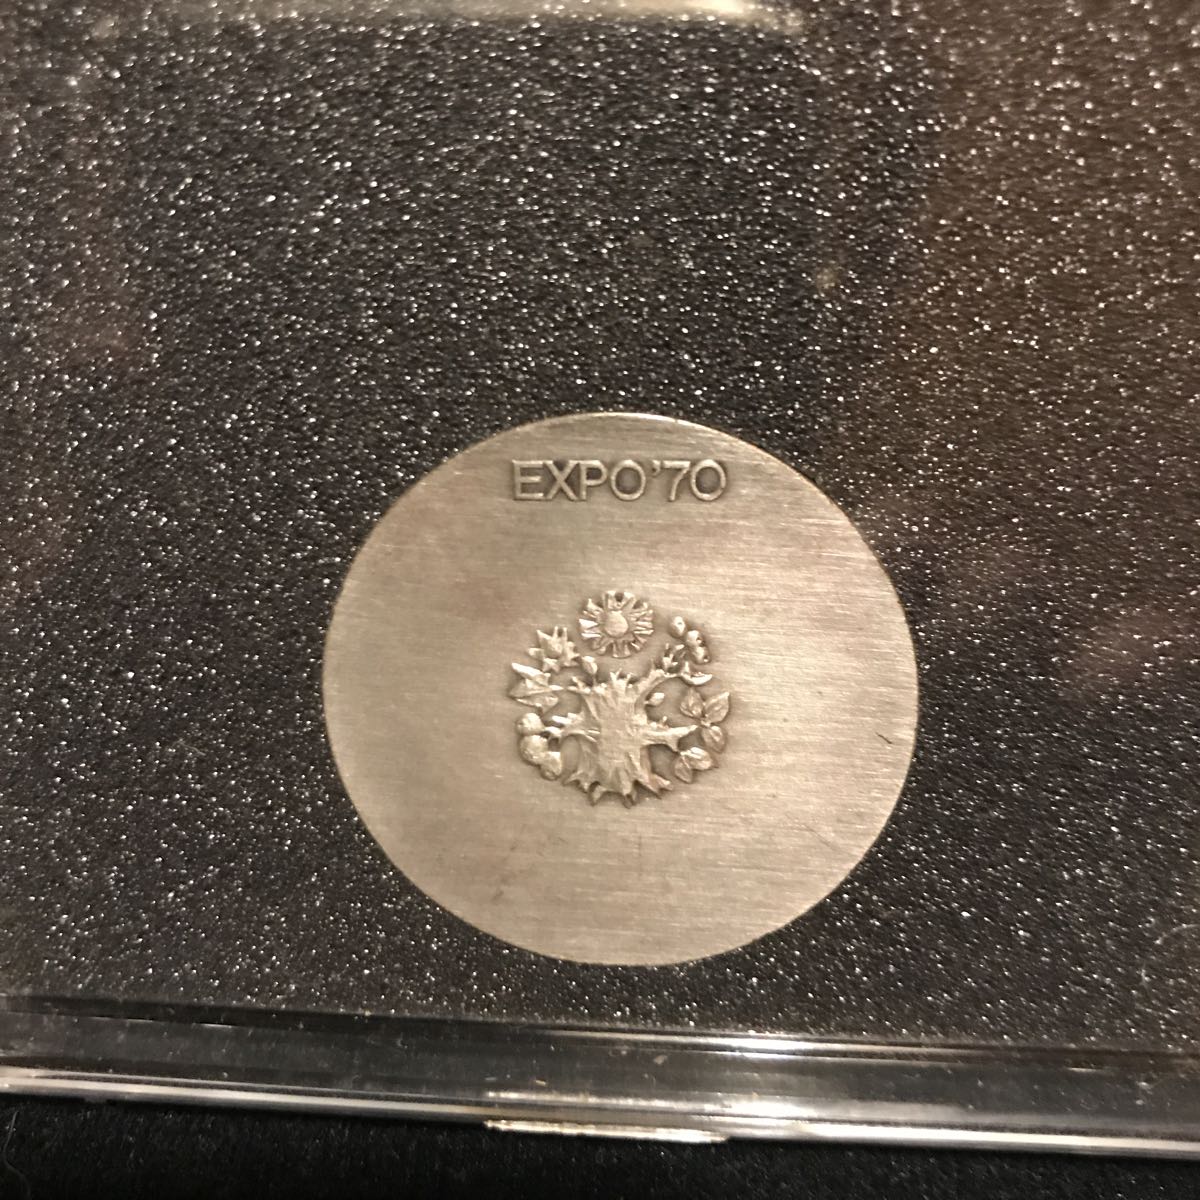 EXPO 70 エキスポ メダル シルバー 銀 日本万博博覧会記念メダル ケース入り 未使用 写真通り箱は劣化してます。_画像5